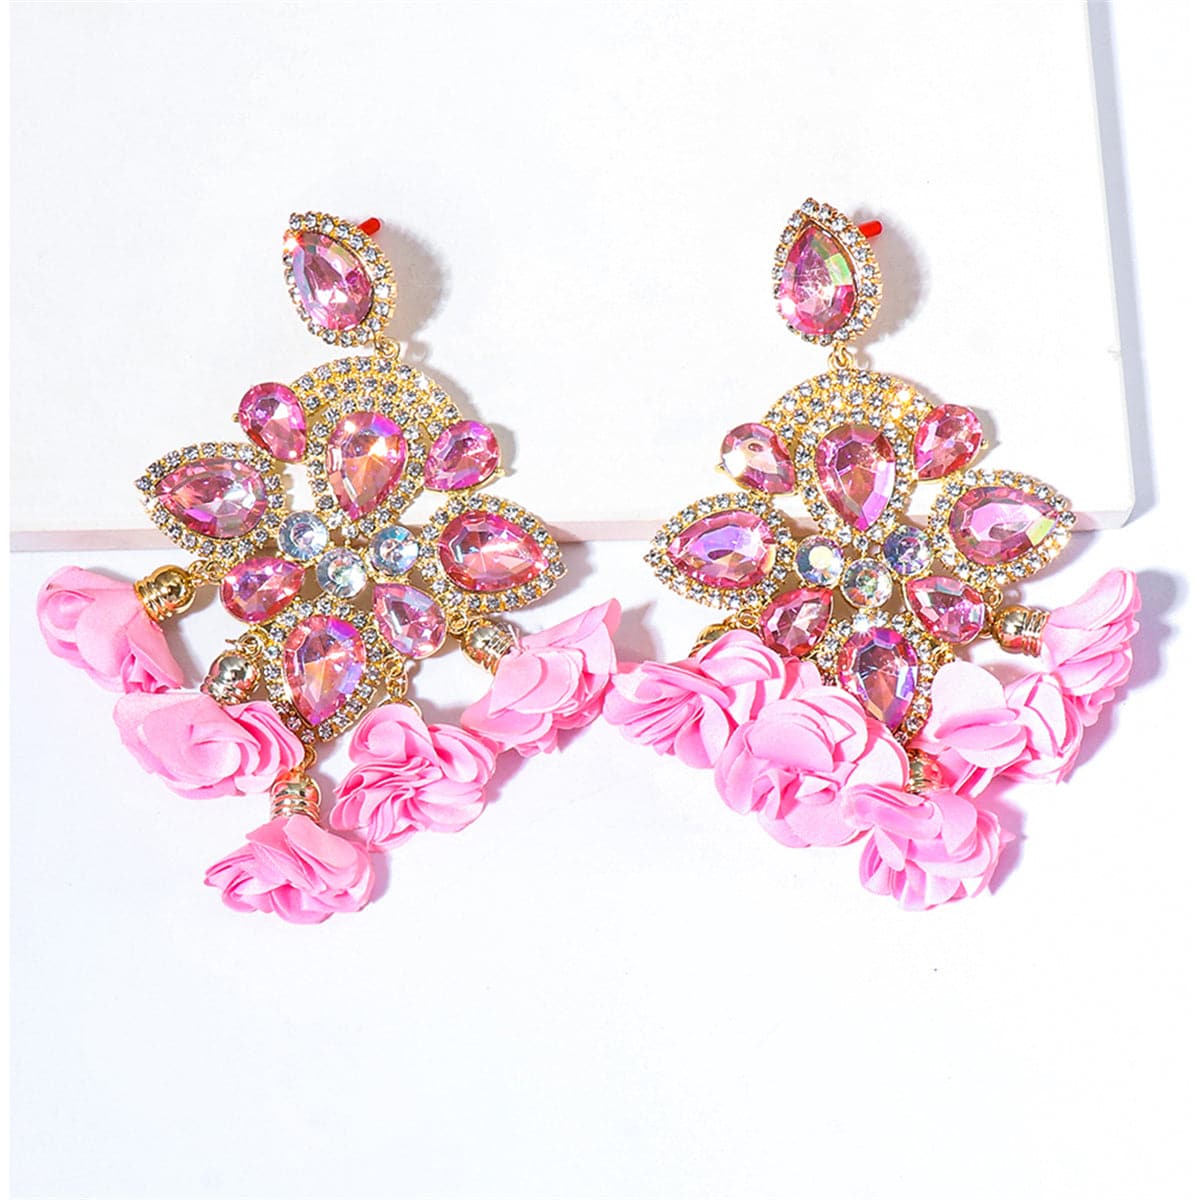 Pink Crystal & Cubic Zirconia Floral Pear-Cut Chandelier Drop Earrings